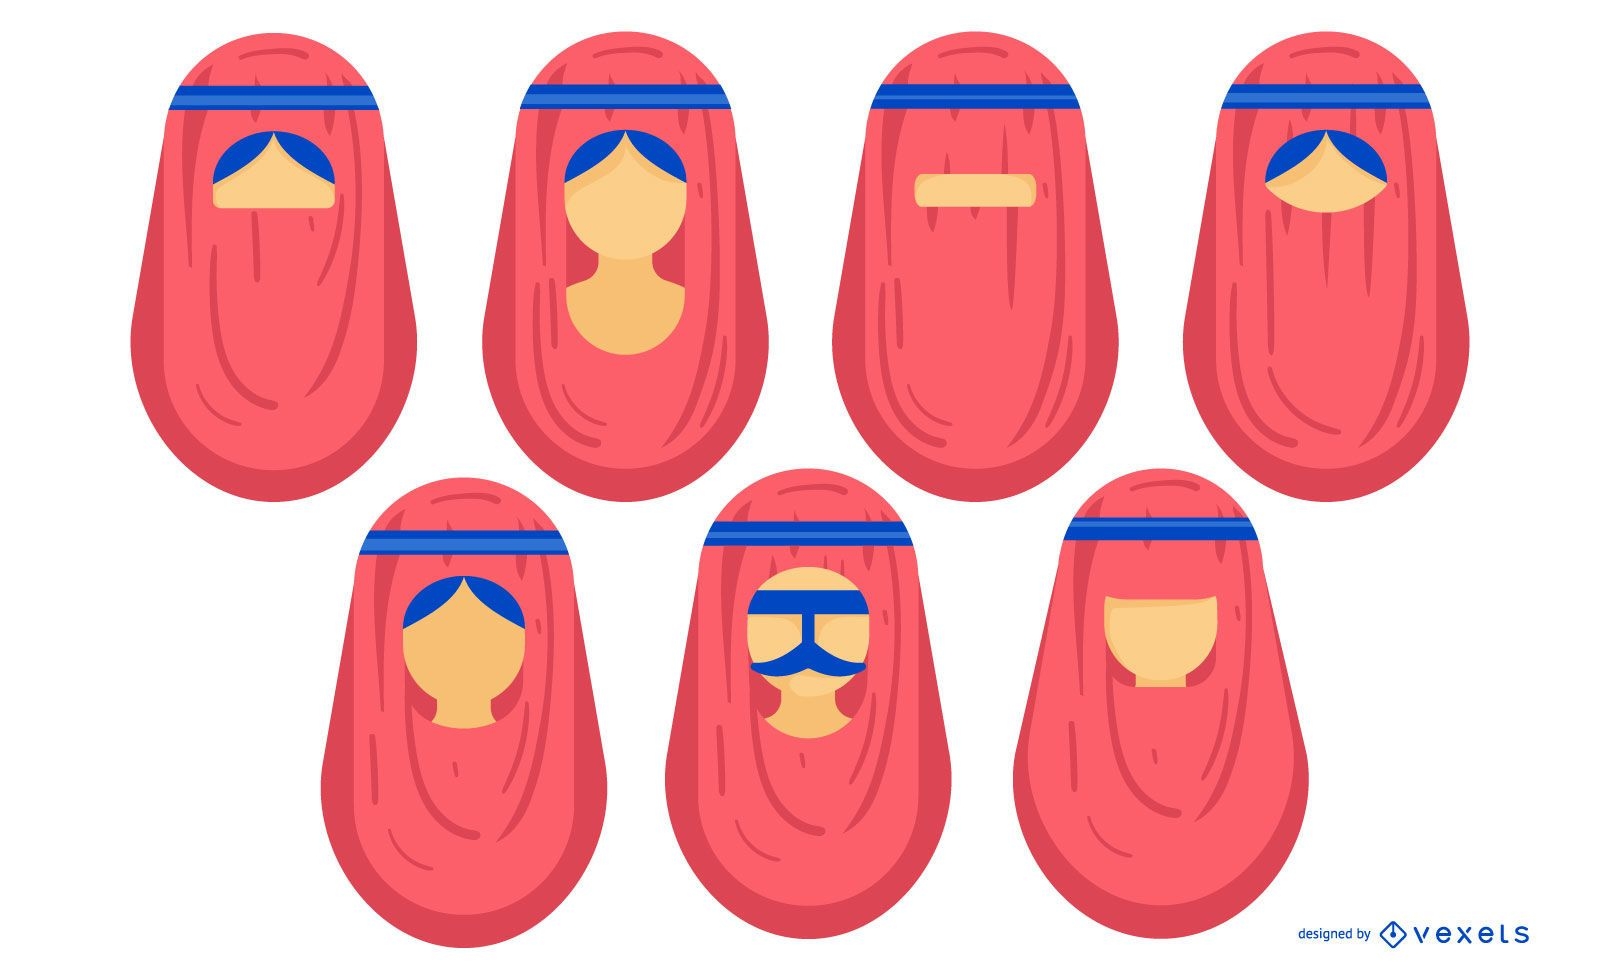 Arab People Face Design Pack